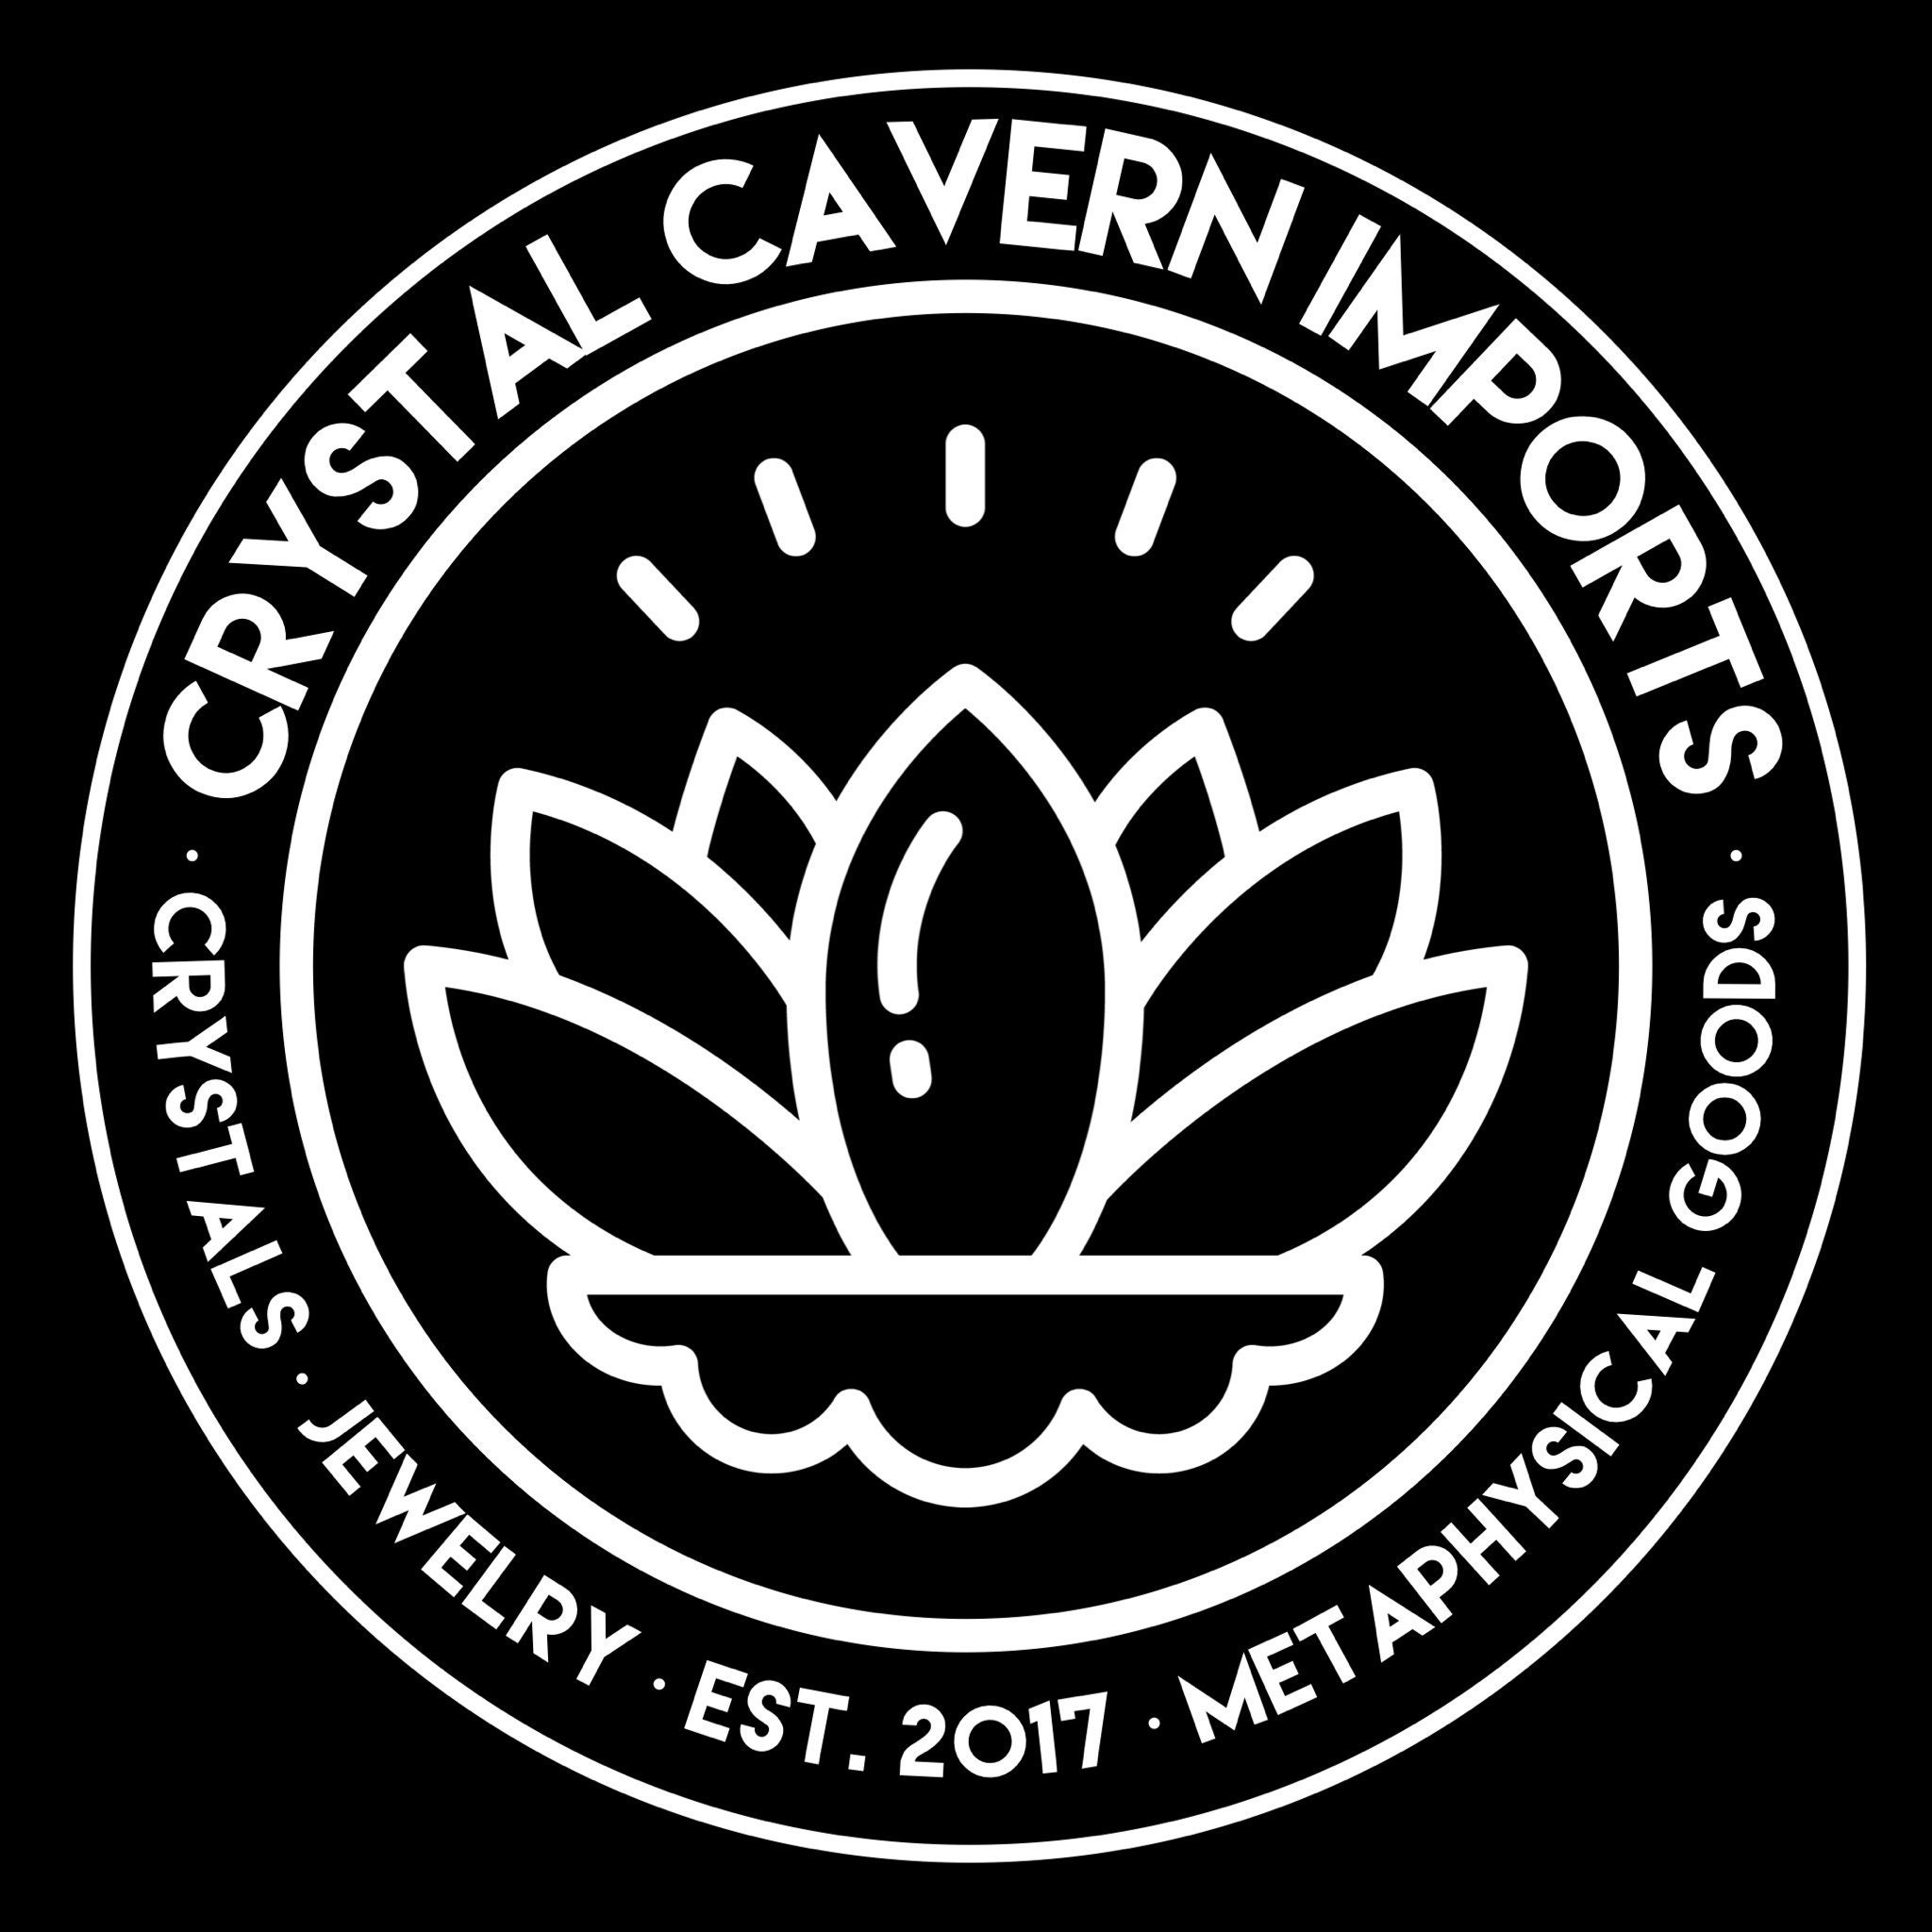 Crystal Cavern Imports by CrystalCavernImports on Etsy